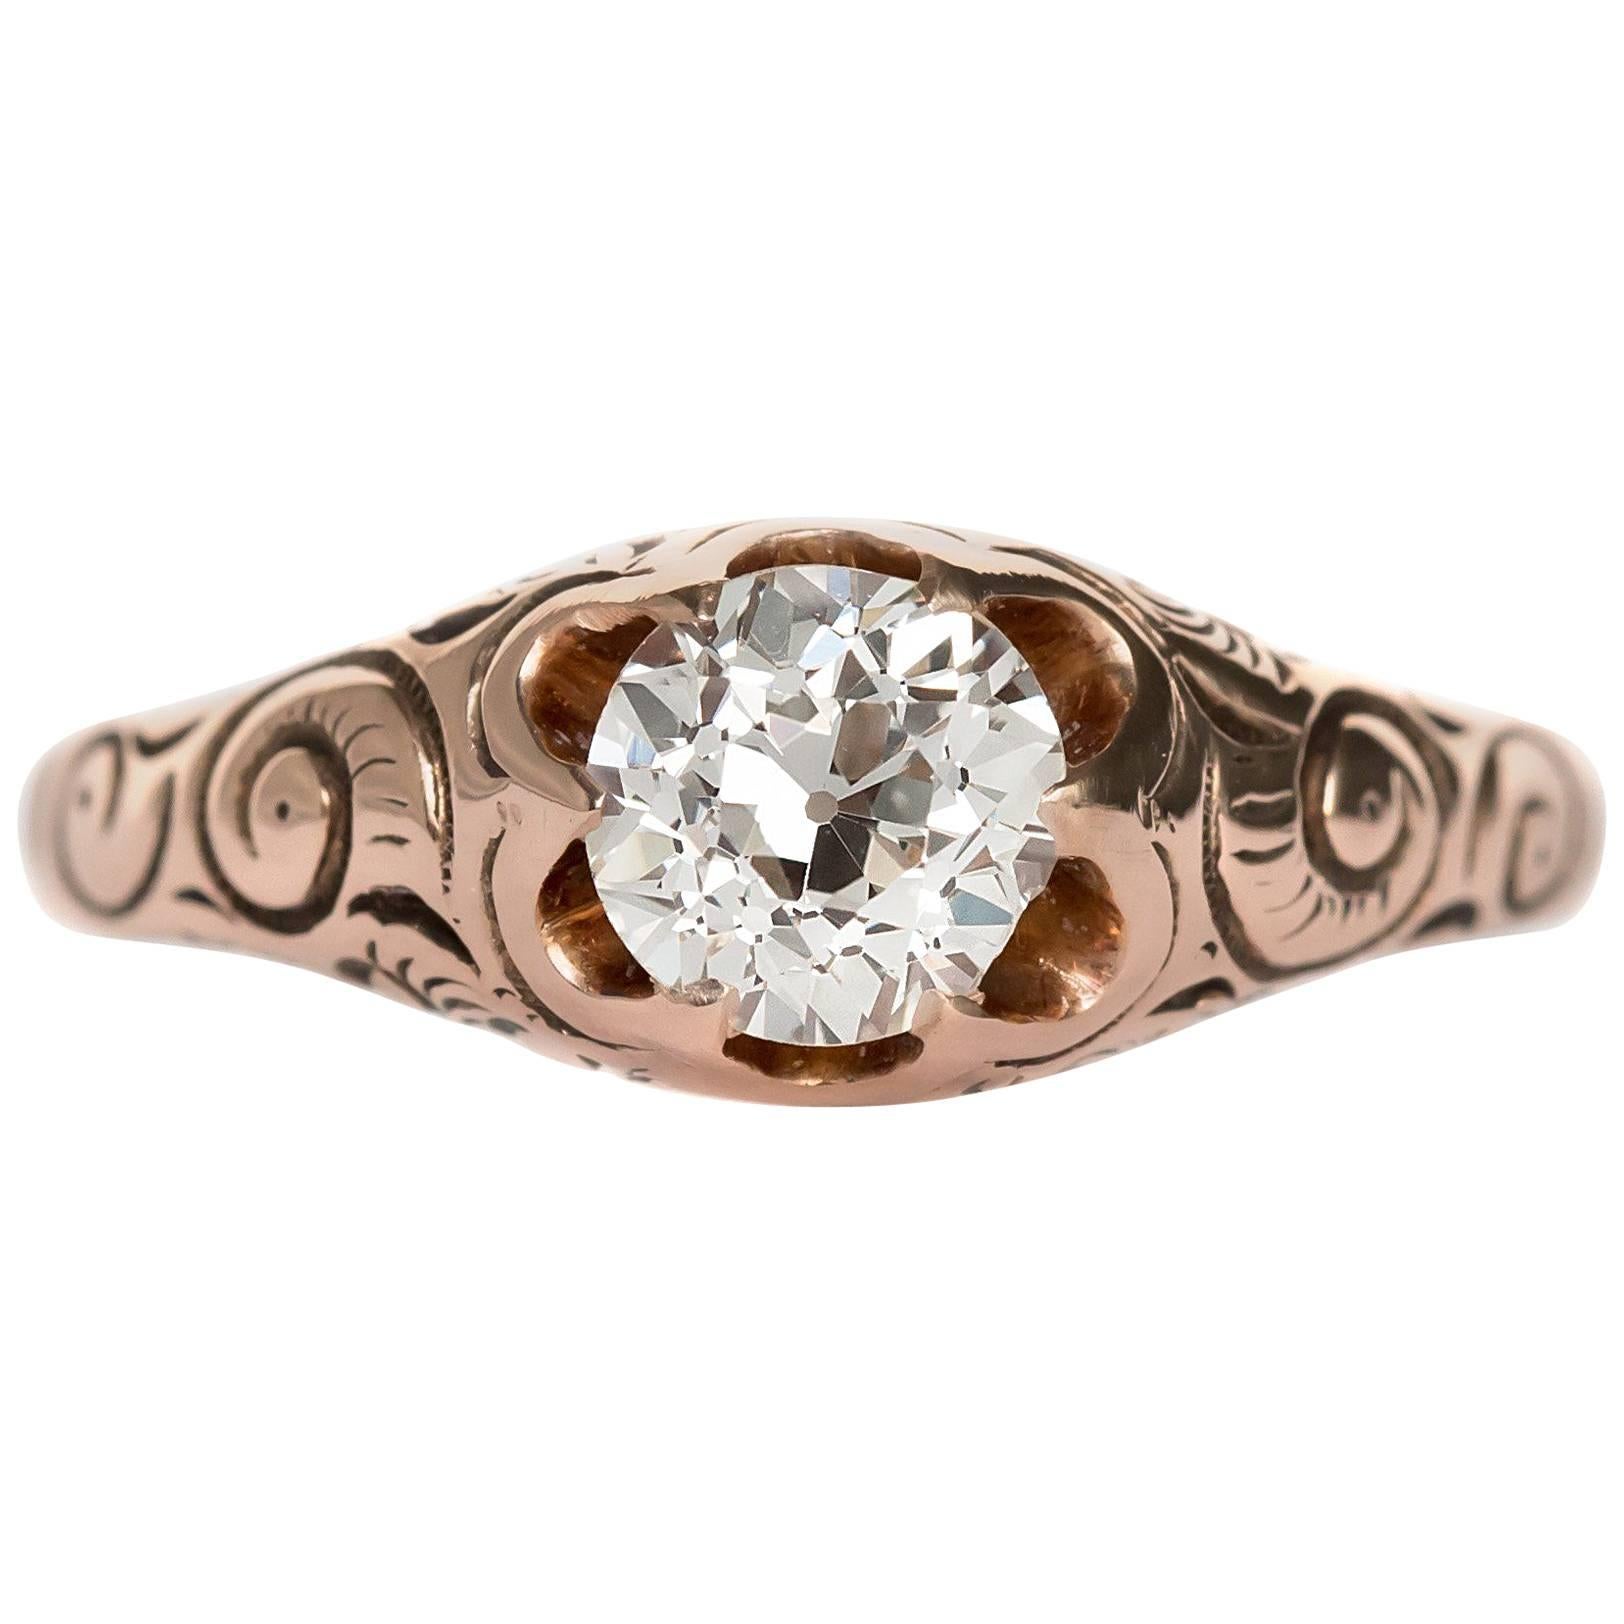 1900 Late Victorian 14 Karat Yellow Gold 0.86 Carat Diamond Engagement Ring